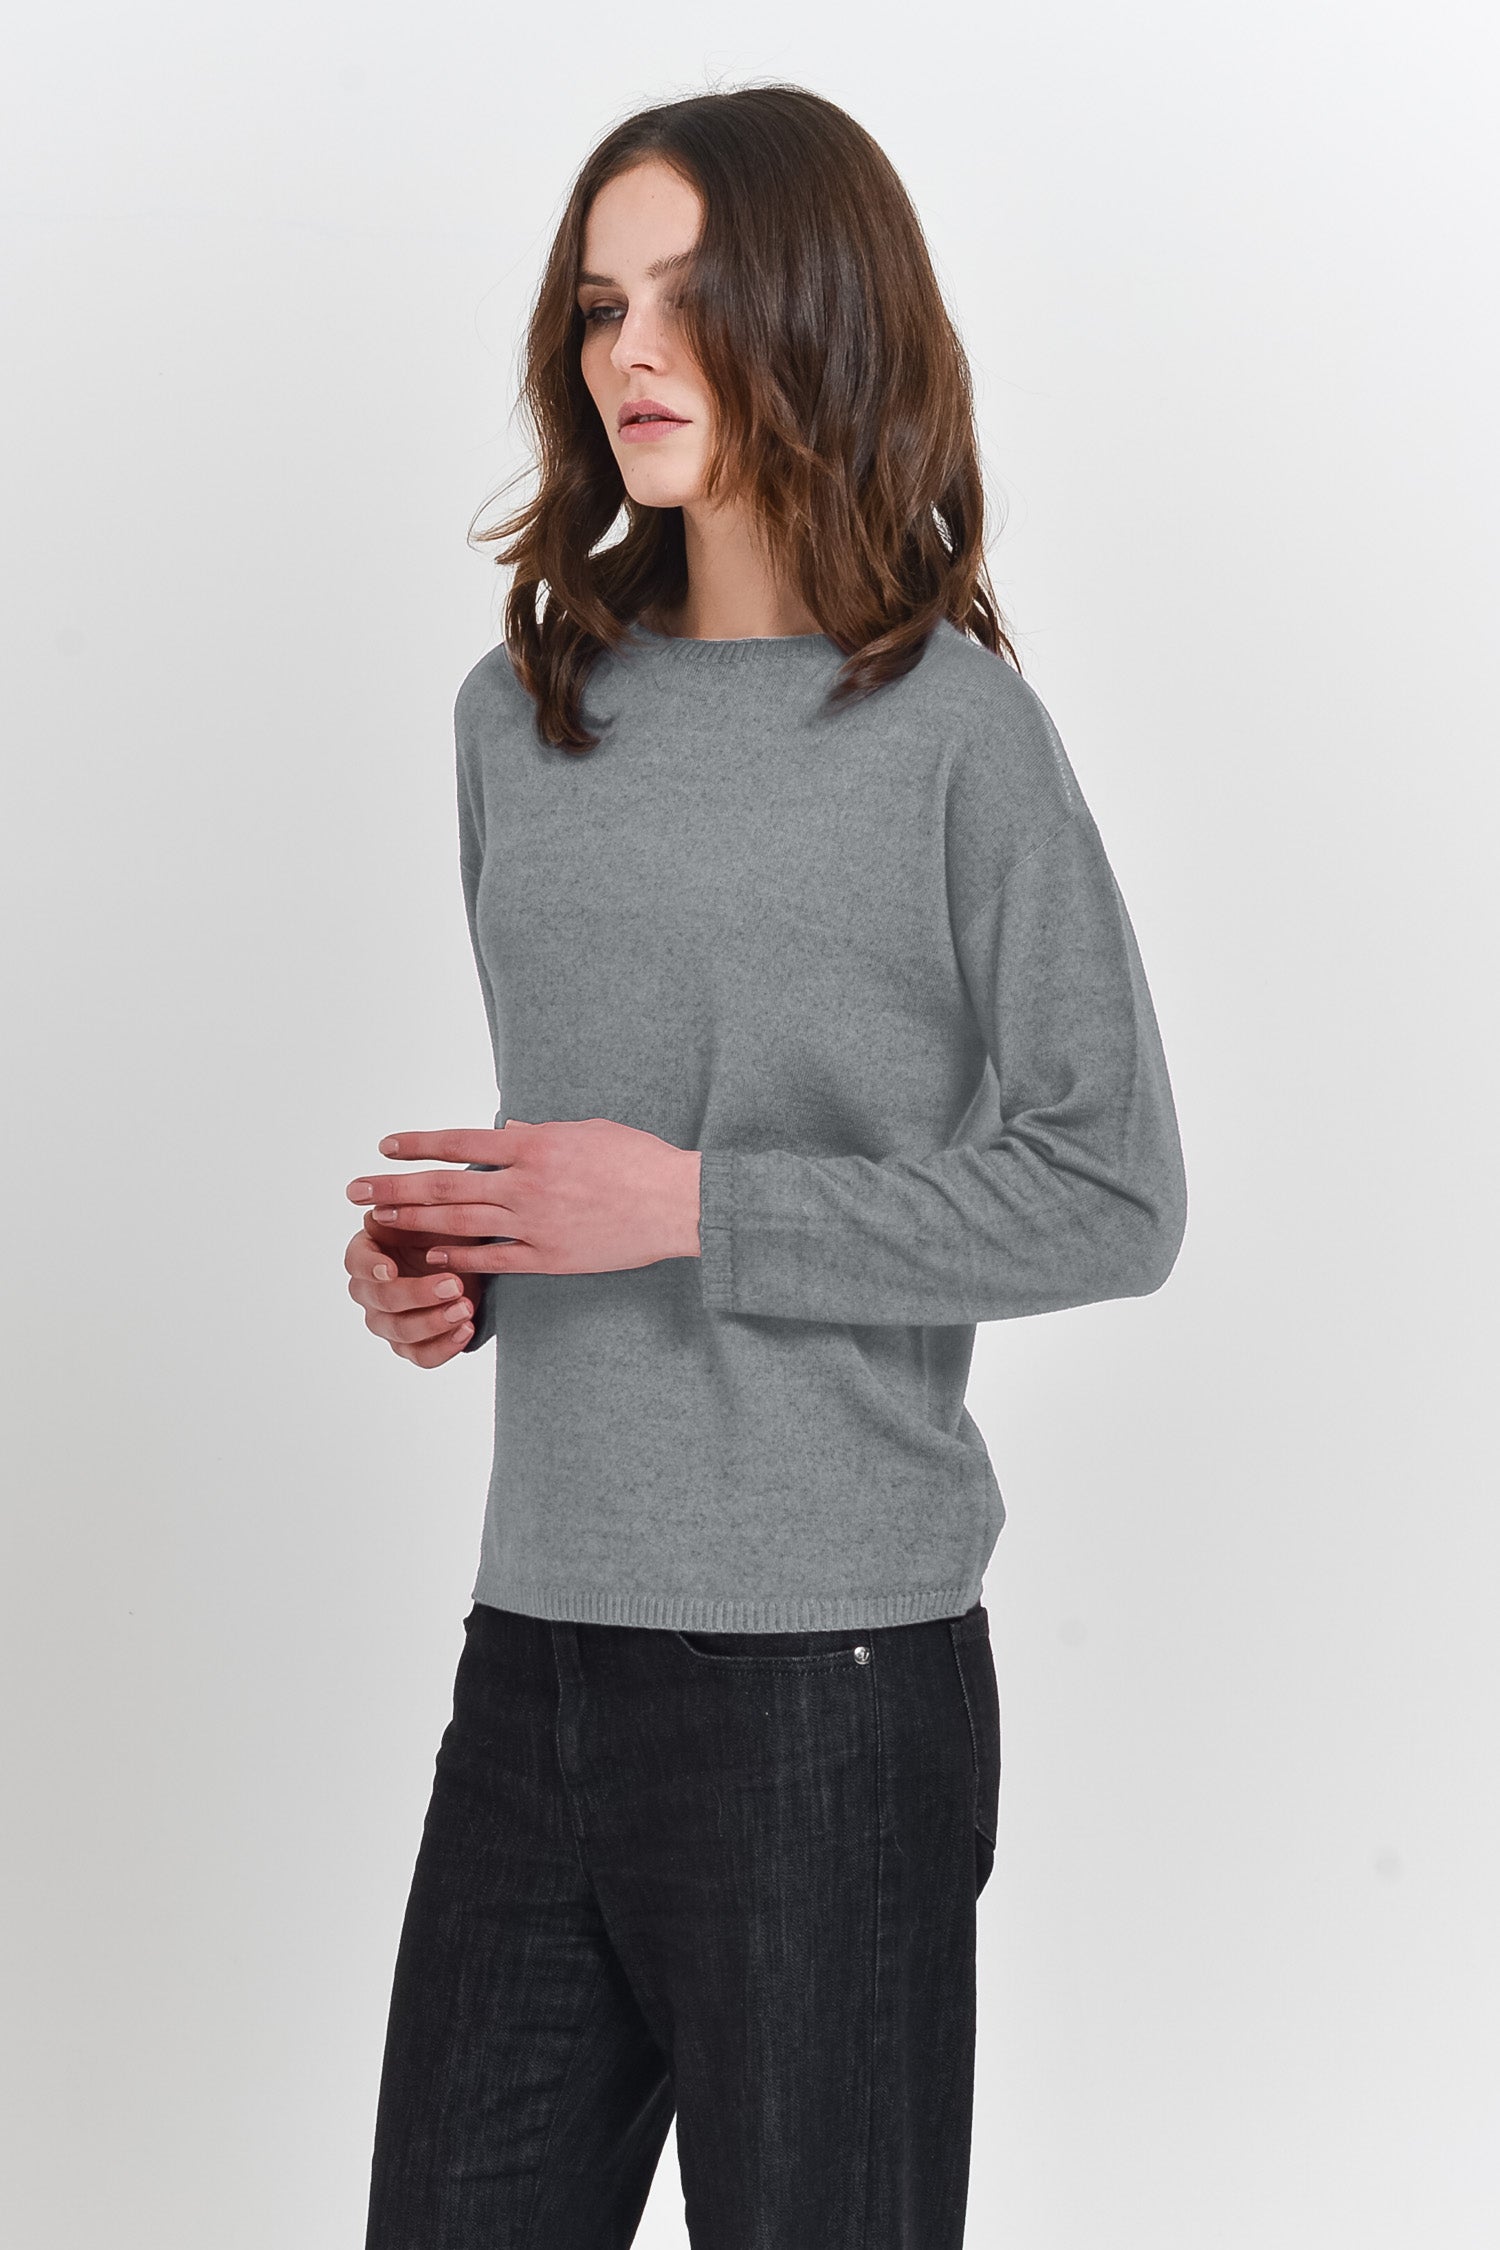 Reay Comfy Sweater - Granite